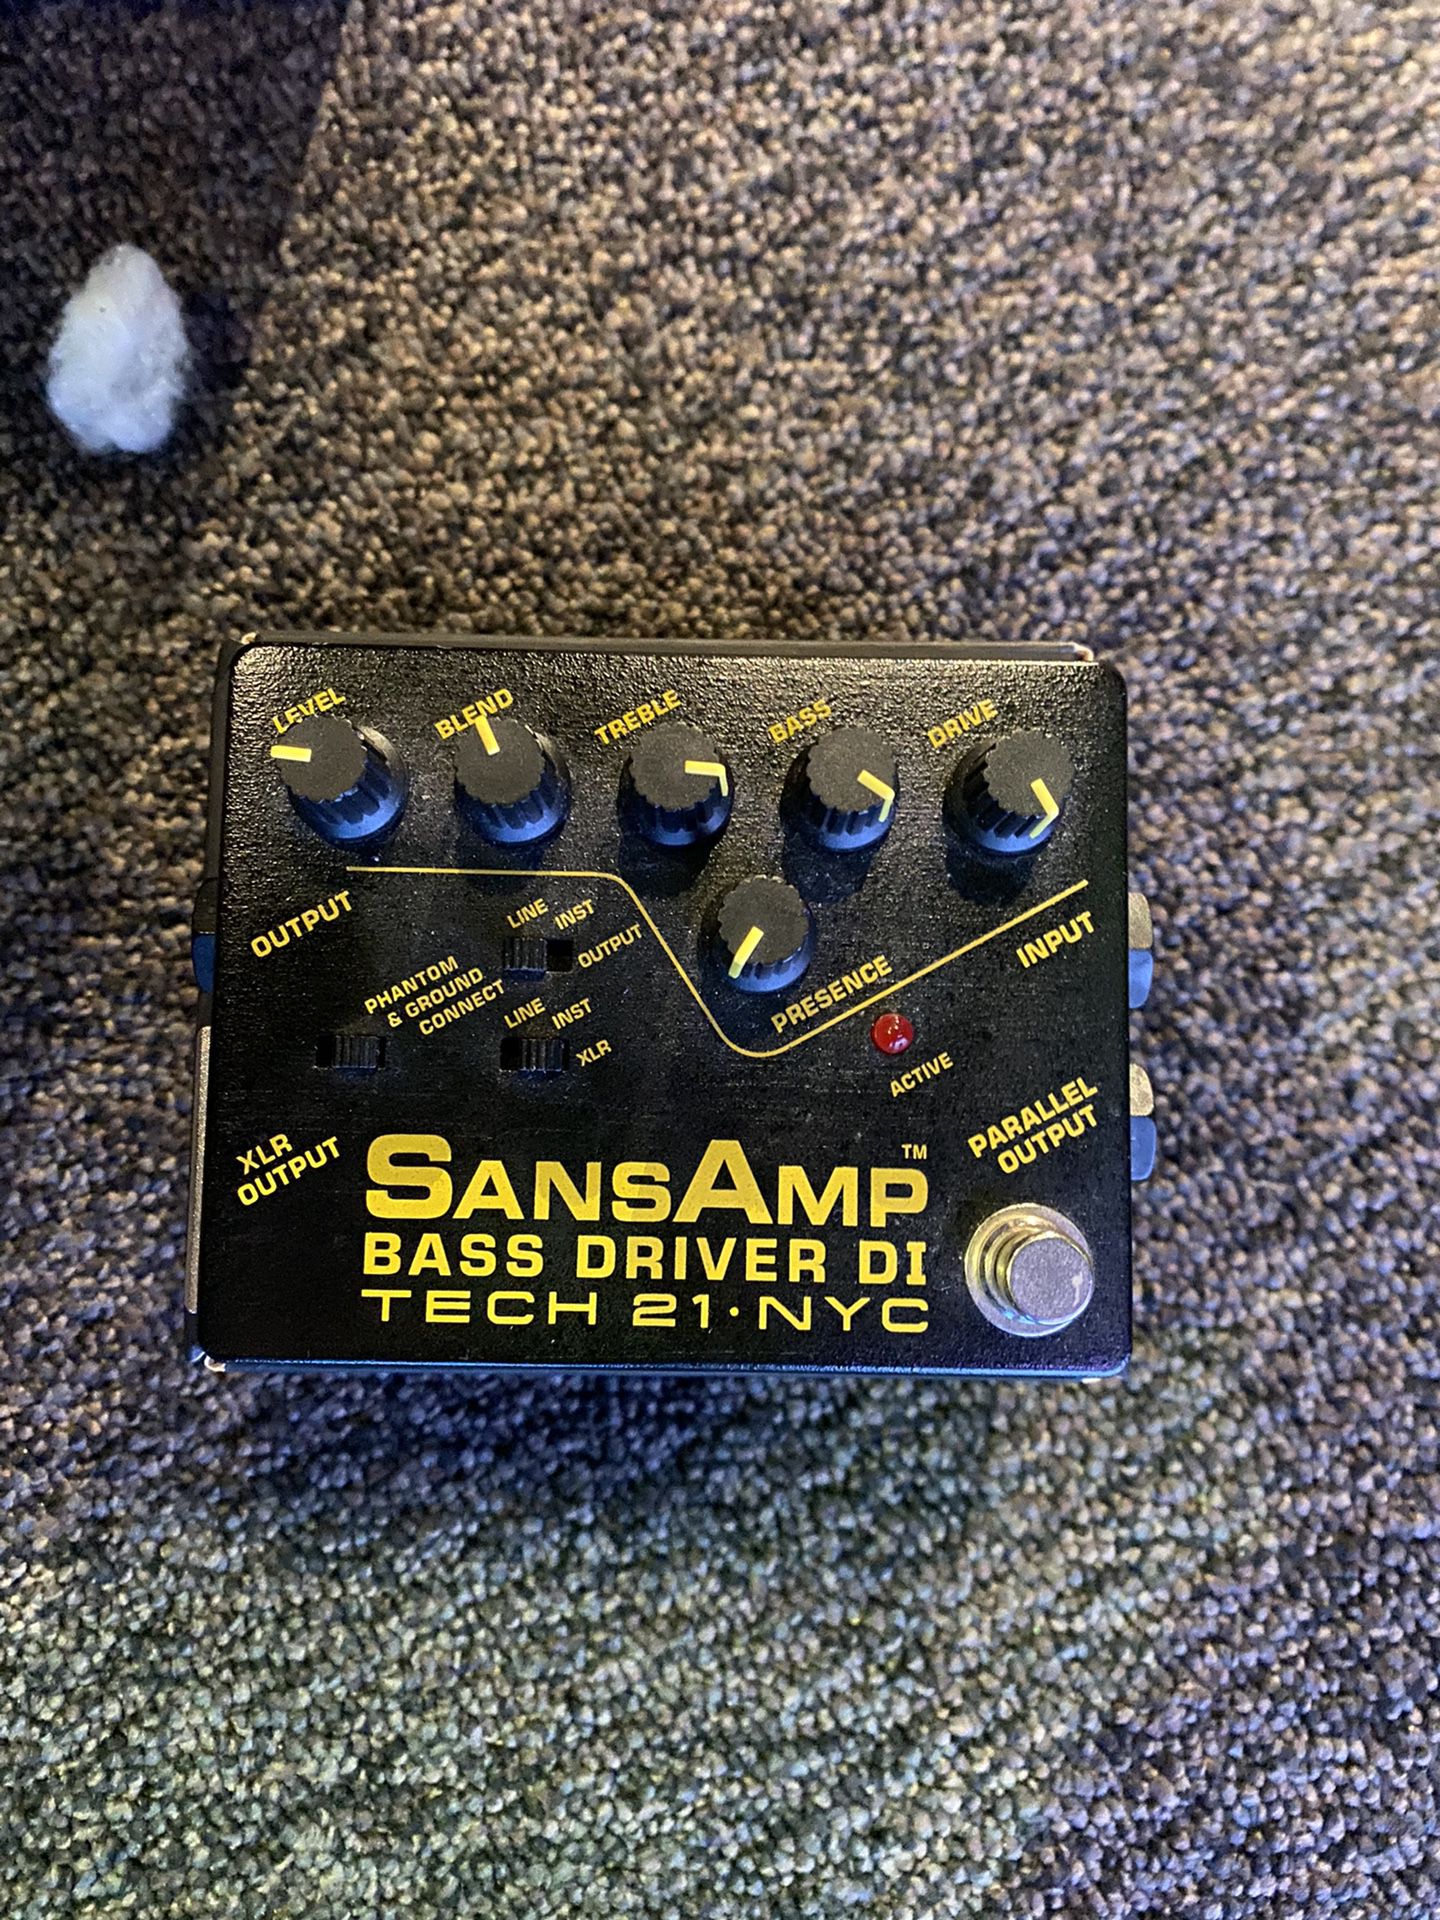 SansAmp Bass Driver DI Tech  for Sale in Dallas, TX   OfferUp